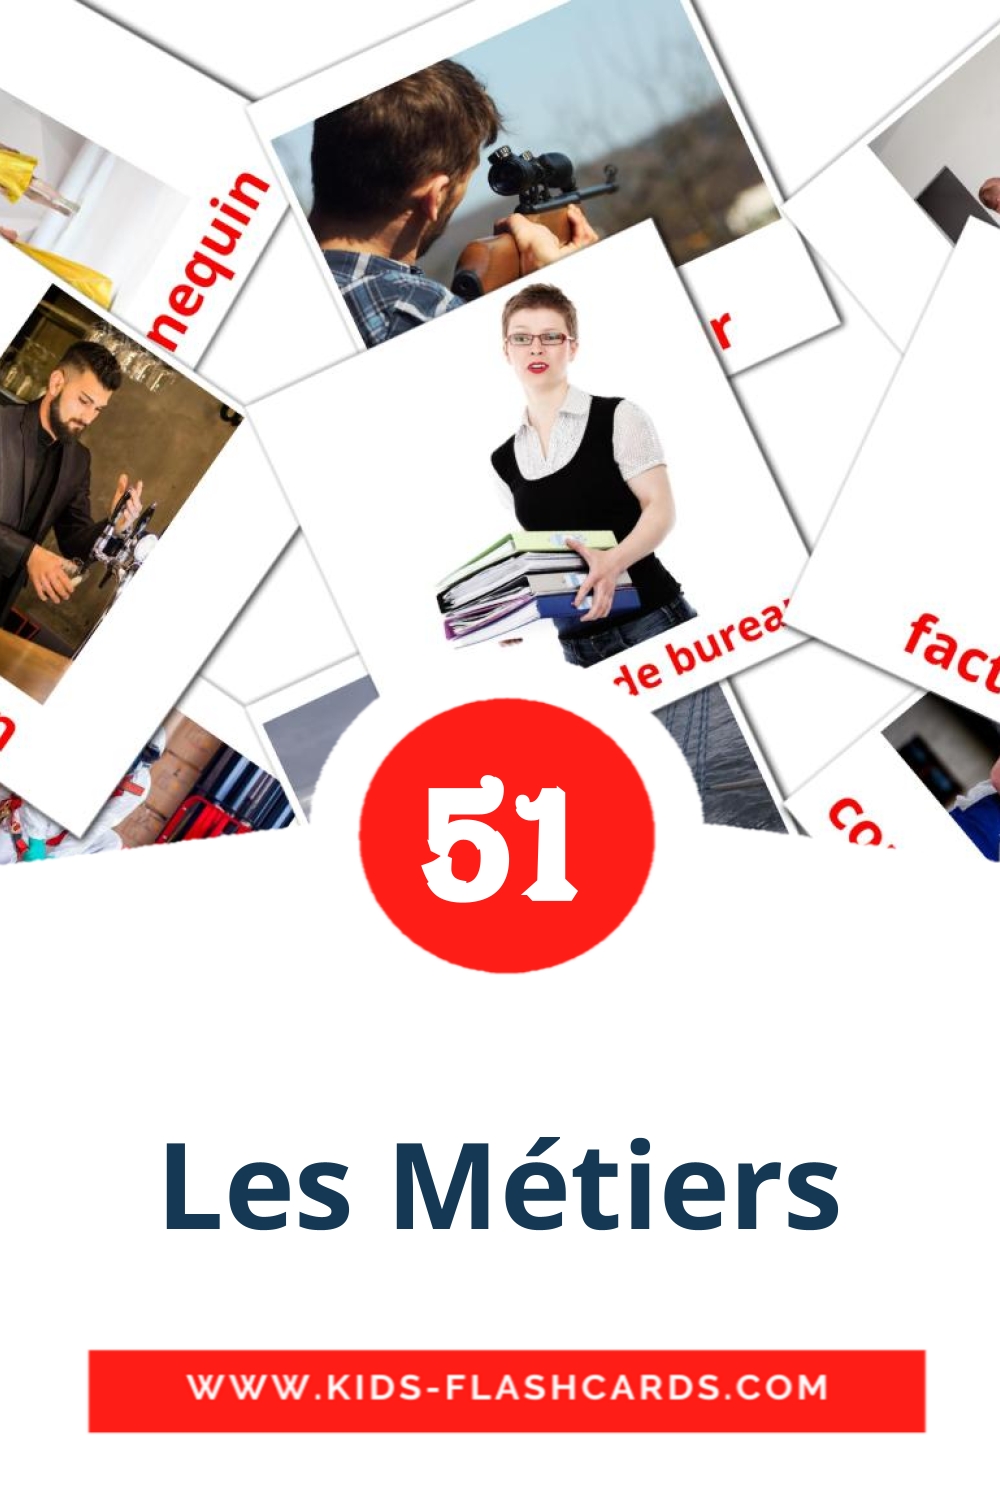 51 carte illustrate di Les Métiers per la scuola materna in francese